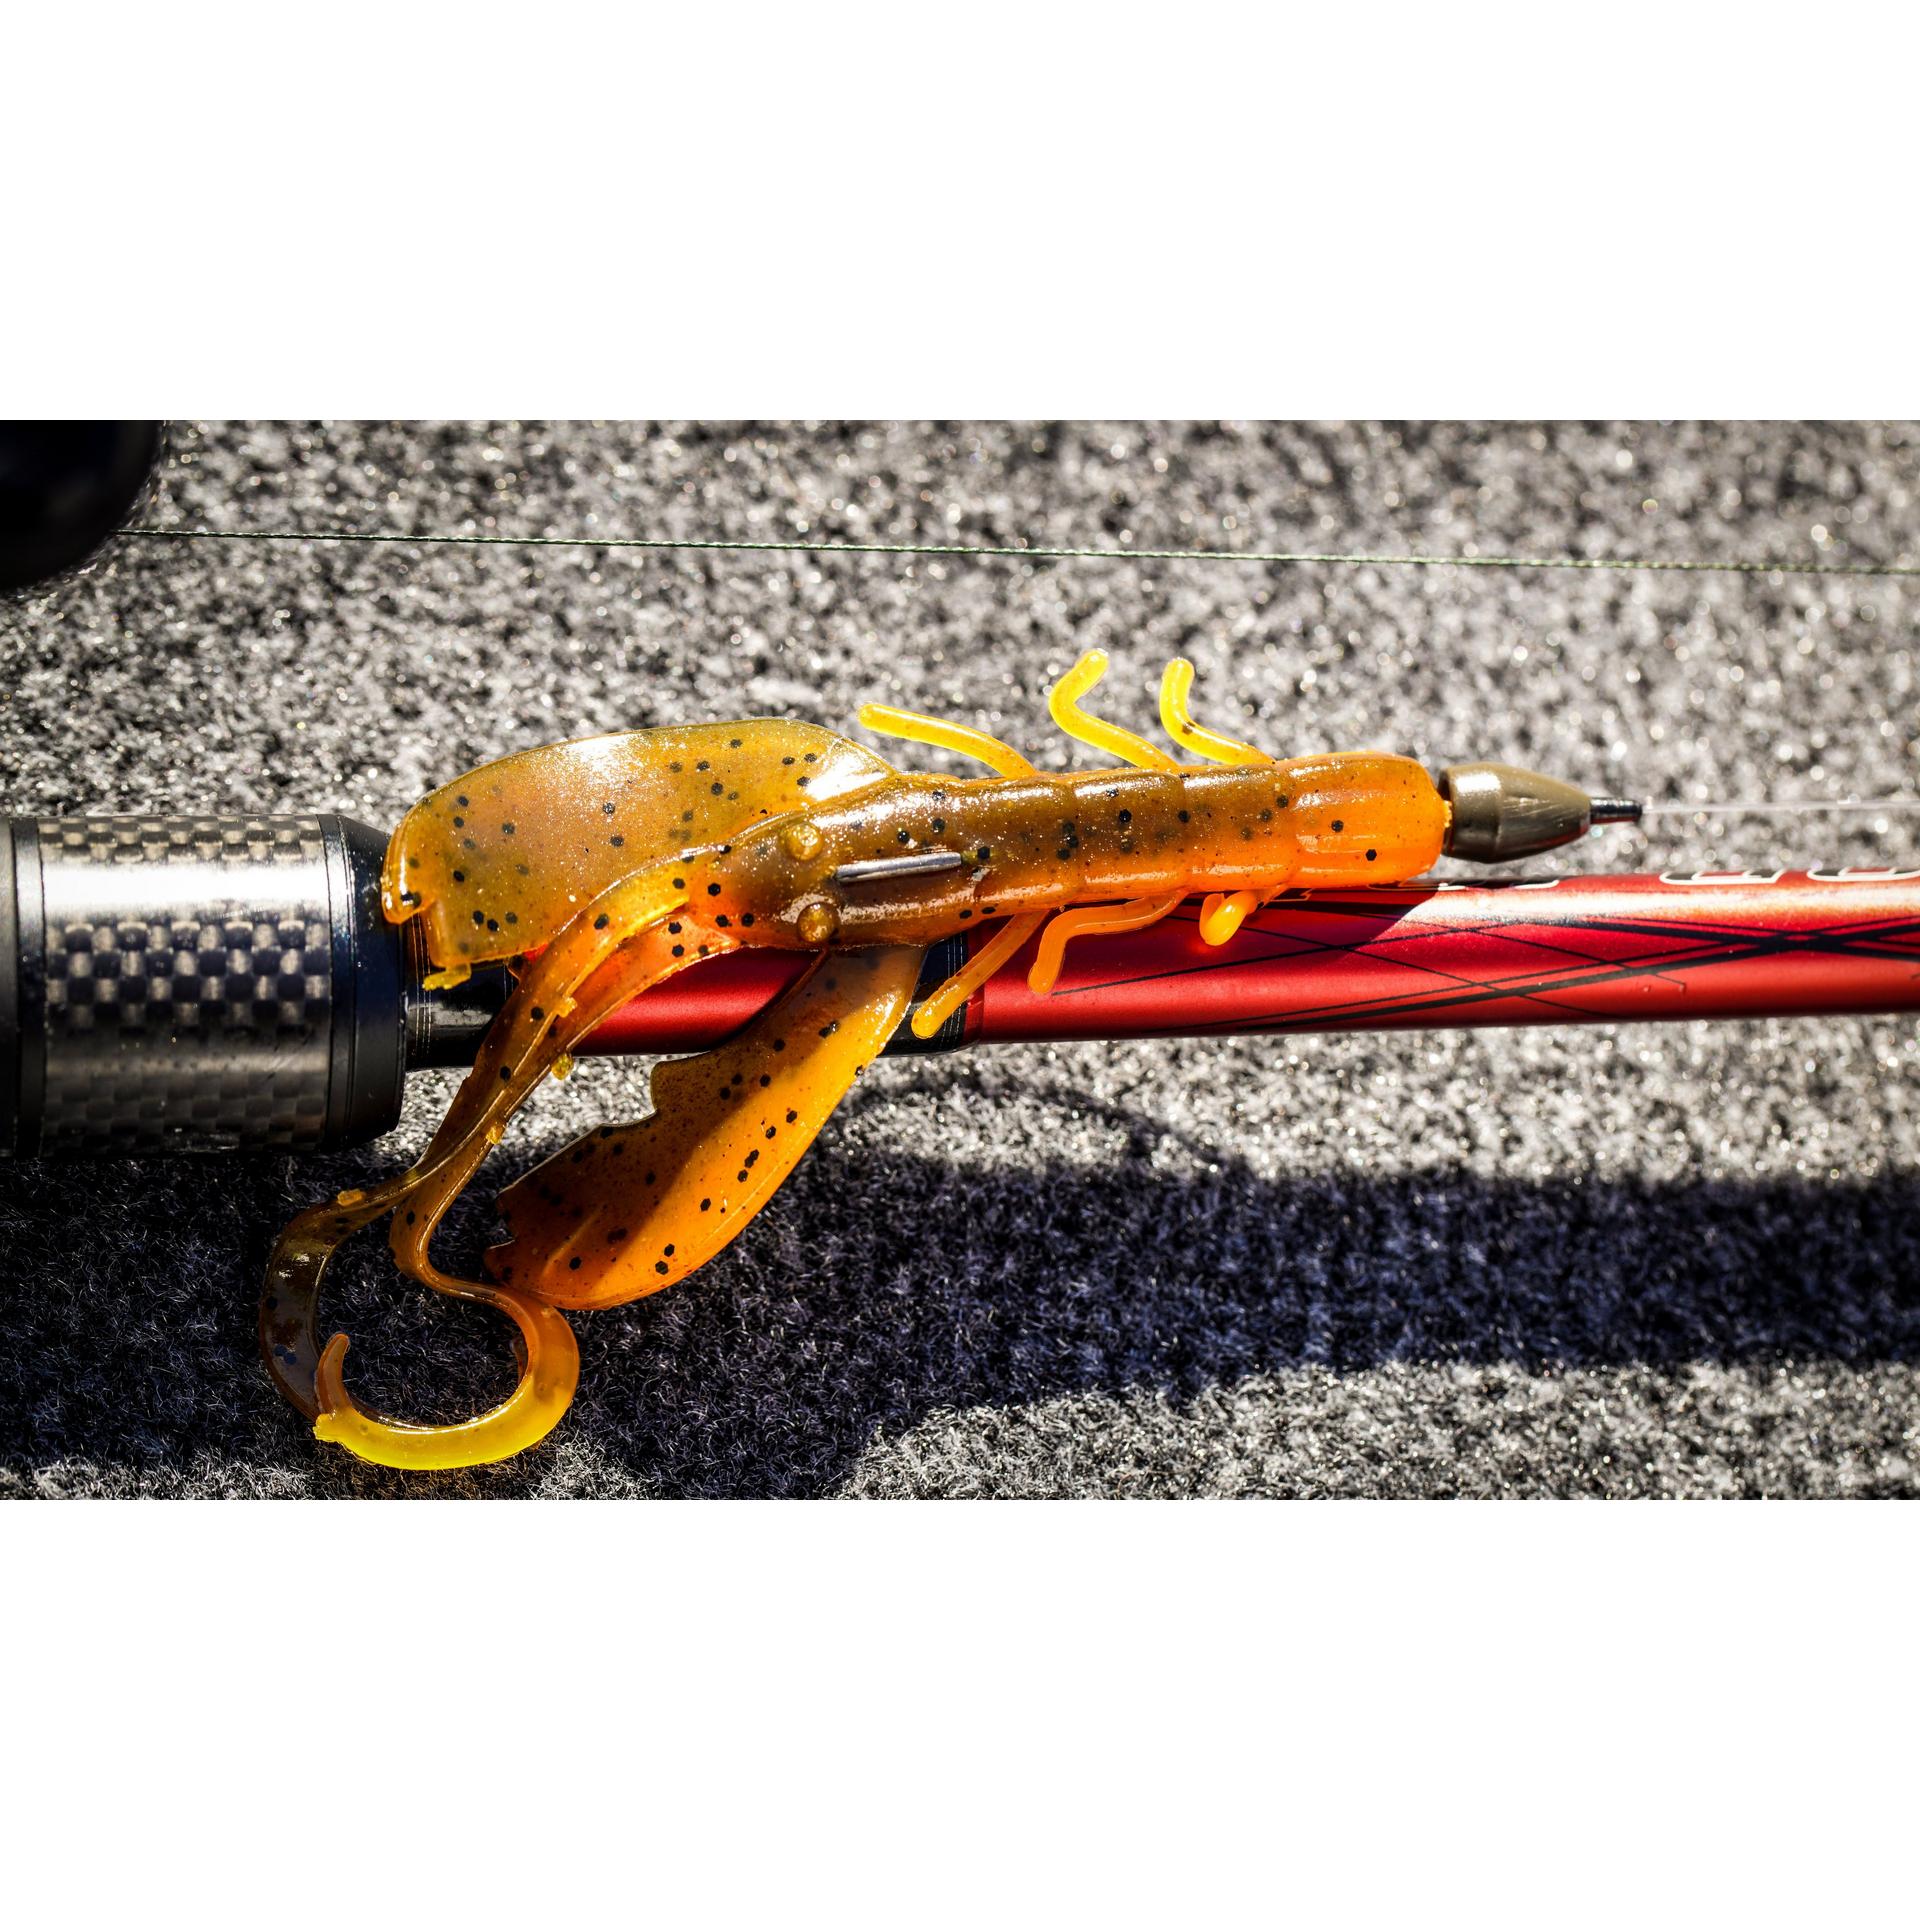 BERKLEY SOFT BAIT POWERBAIT CRAZY LEGS CHIGGER CRAW LIFESTLYE 2021 001 | Berkley Fishing